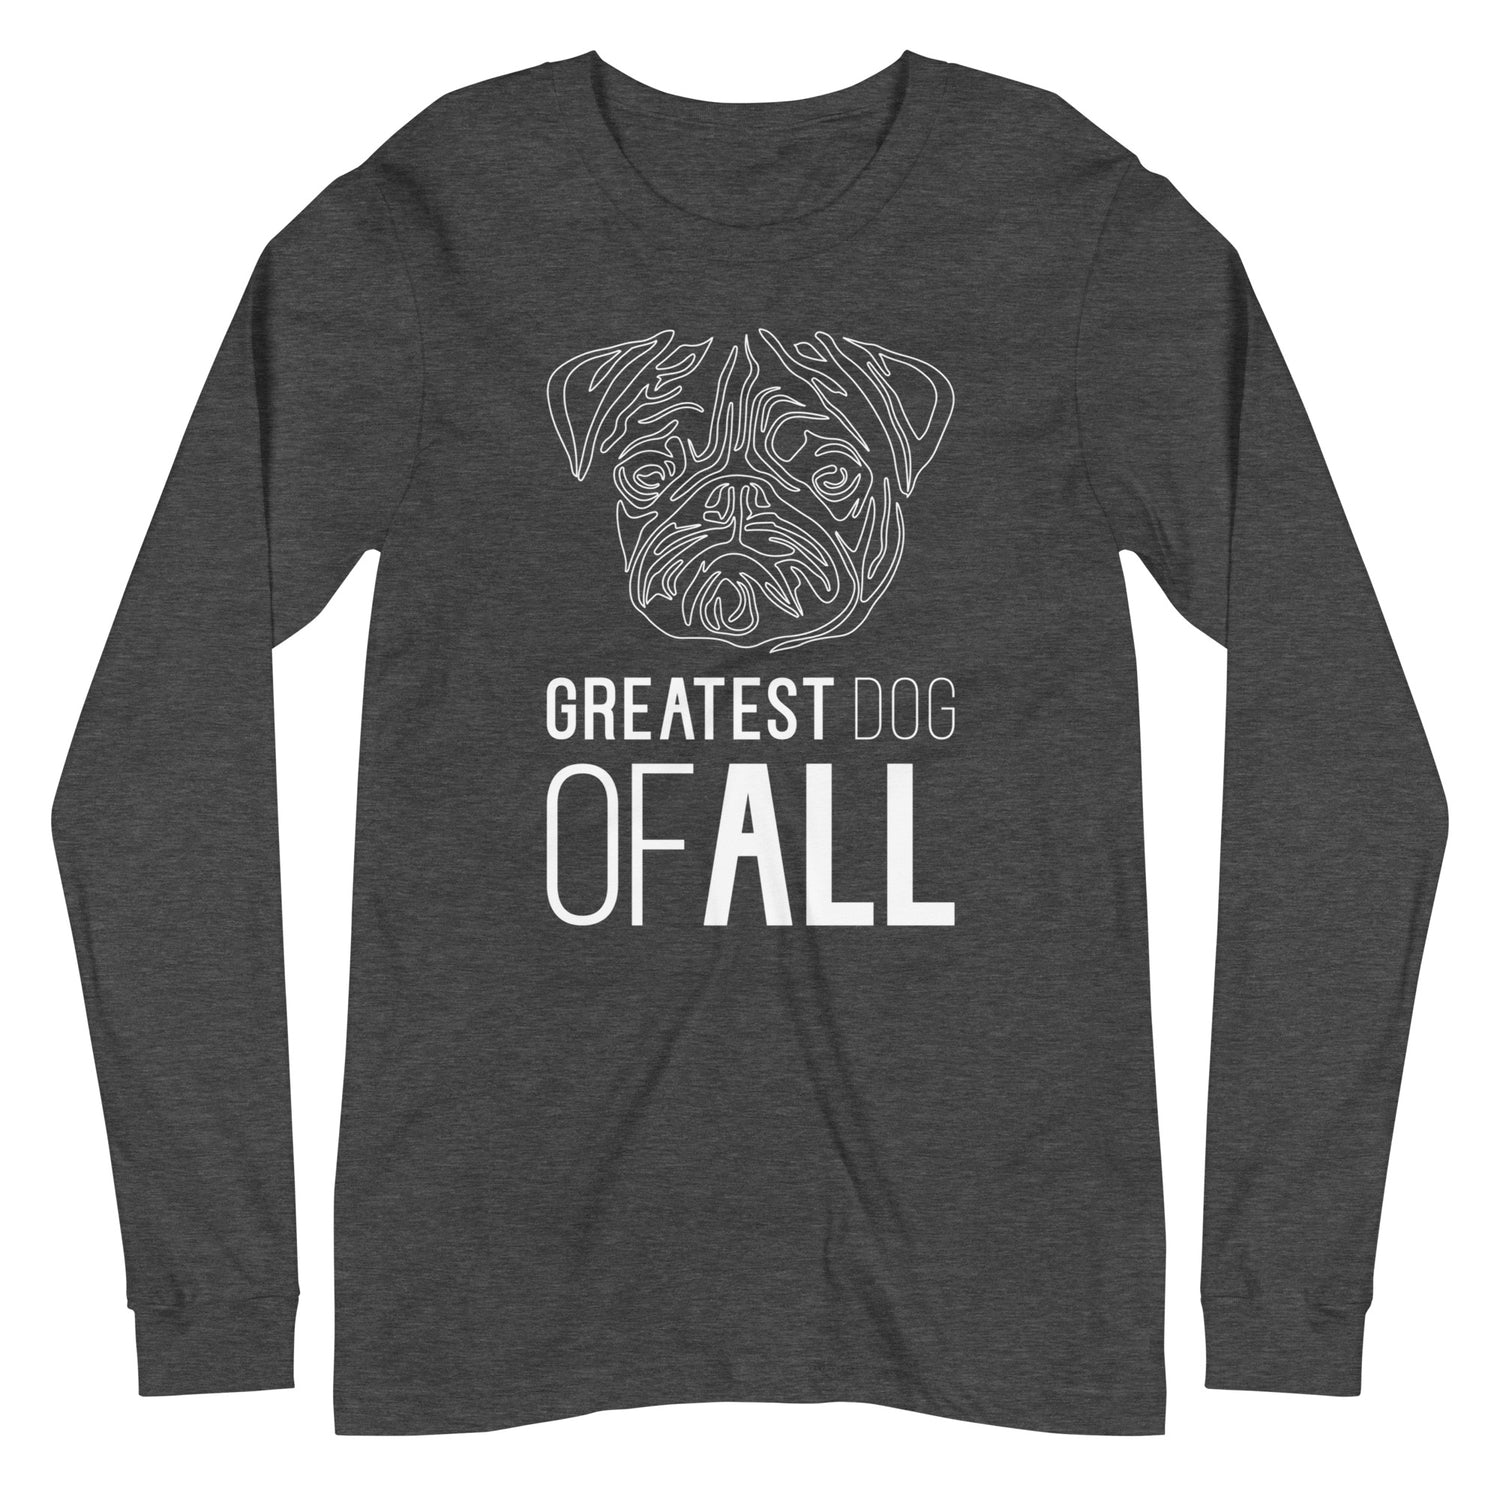 White line Pug face with Greatest Dog of All caption on unisex dark grey heather long sleeve t-shirt